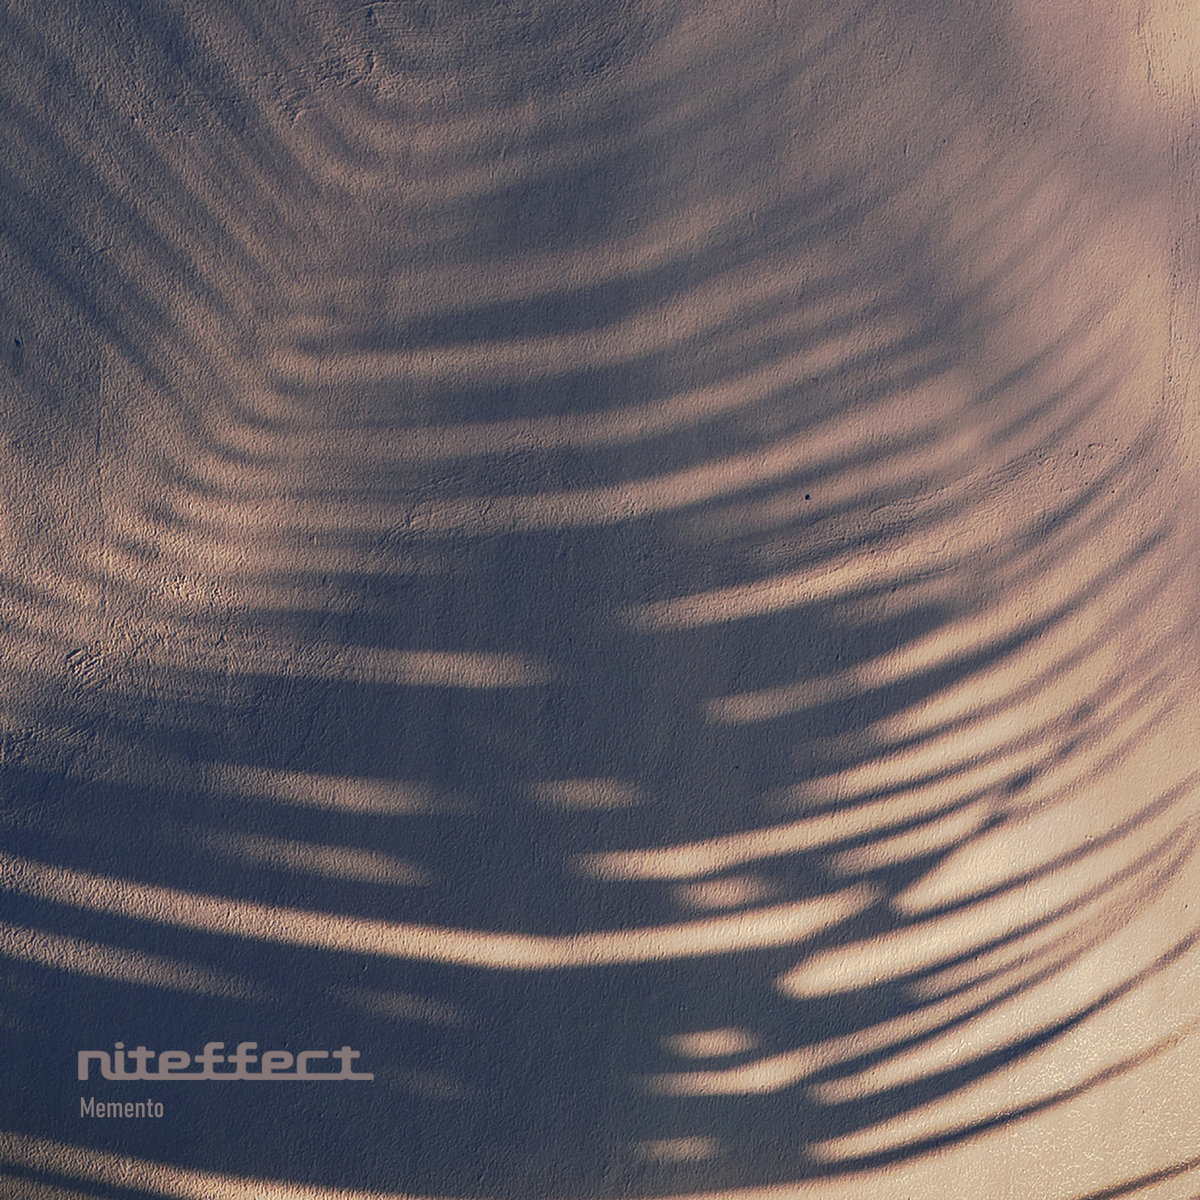 niteffect – memento ep